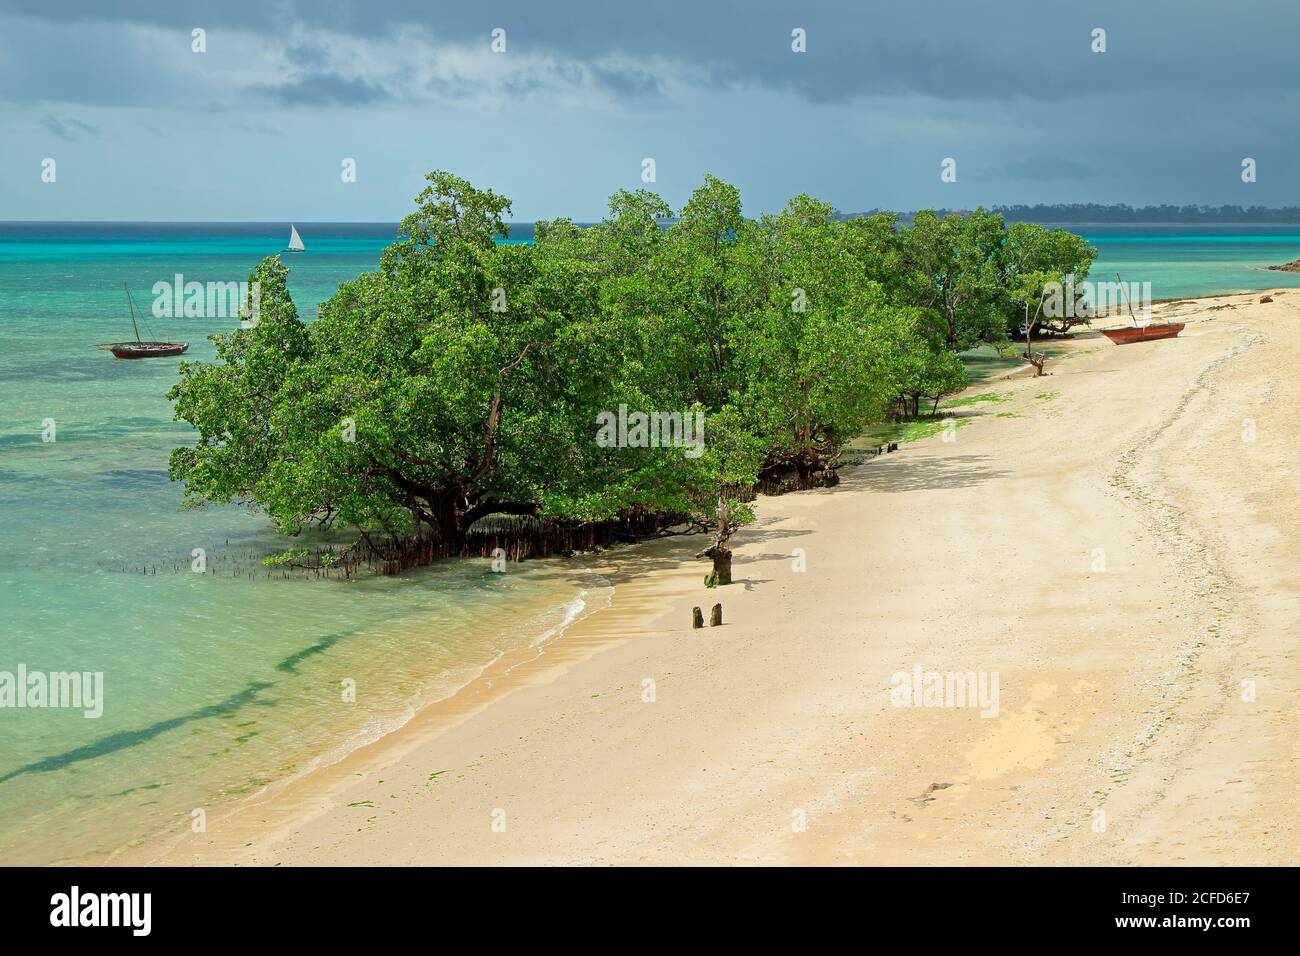 Mangrove trees and sandy beach on the tropical coast of Zanzibar island Stock Photo